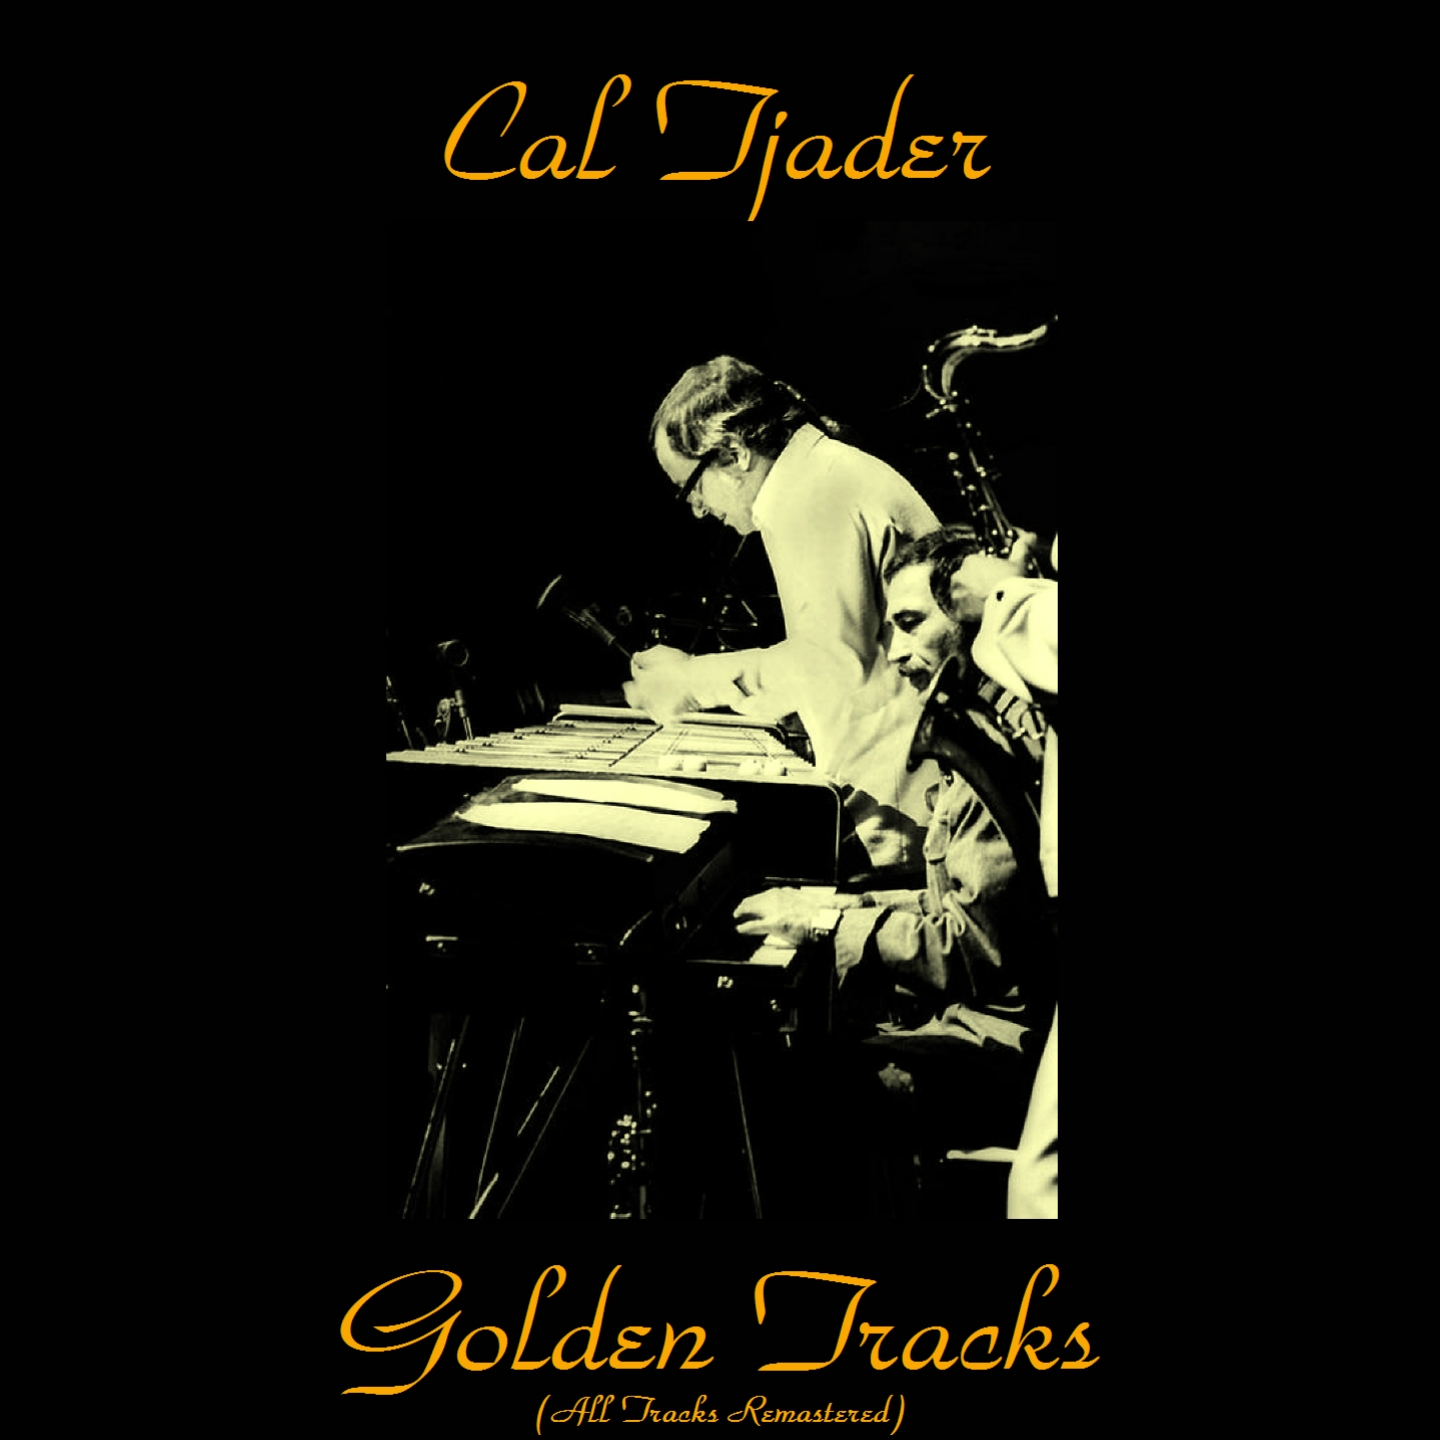 Cal Tjader Golden Tracks (All Tracks Remastered)